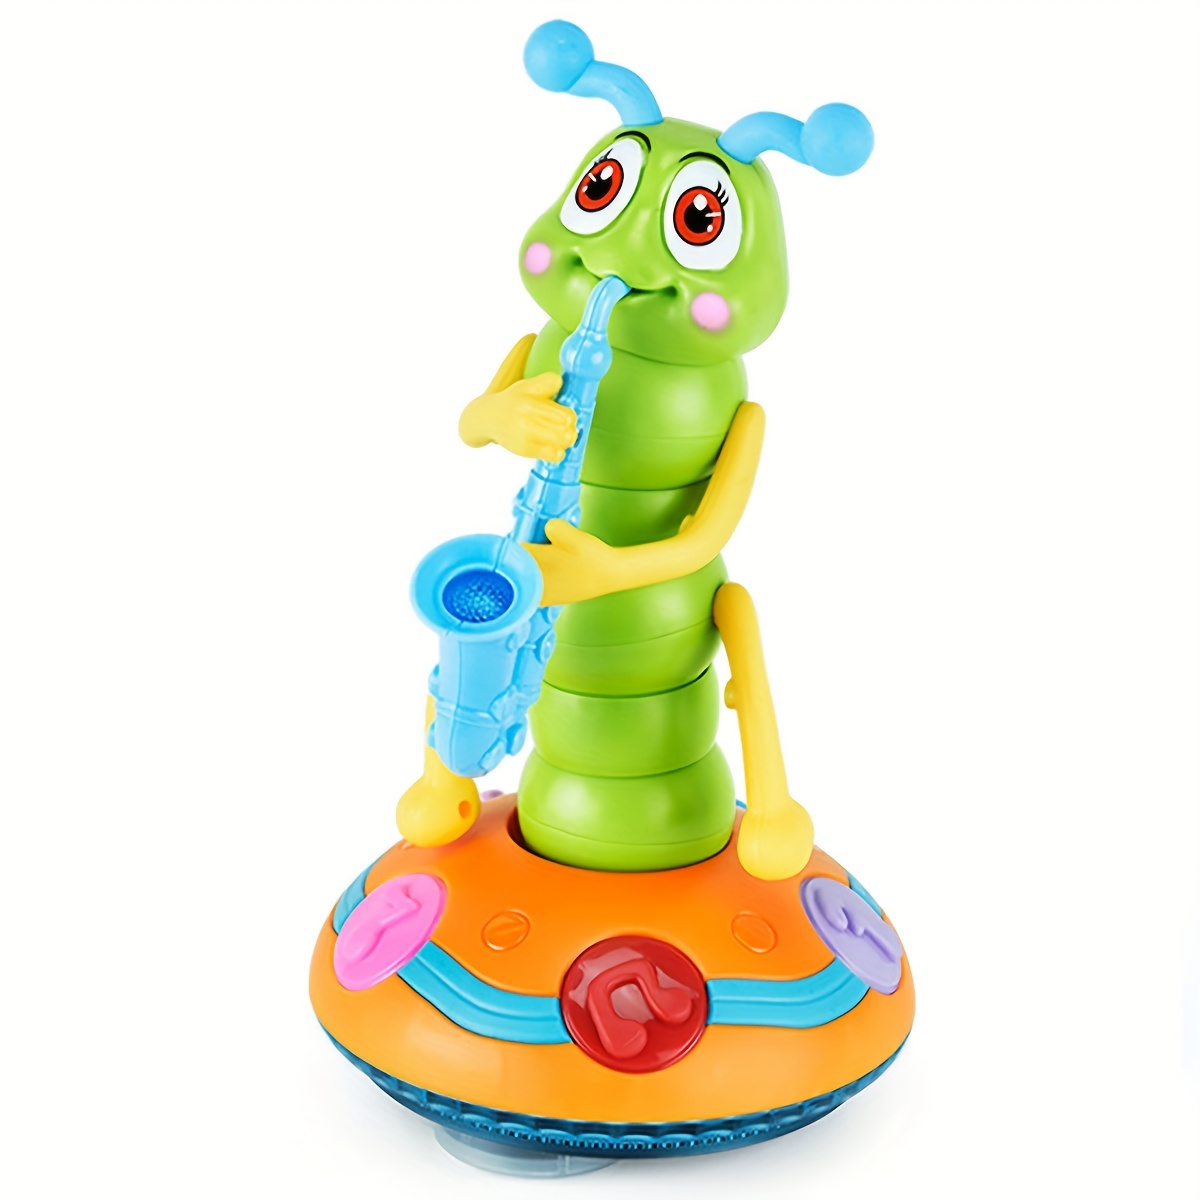 Fun Musical Caterpillar Toy Interactive Singing Twist Worm